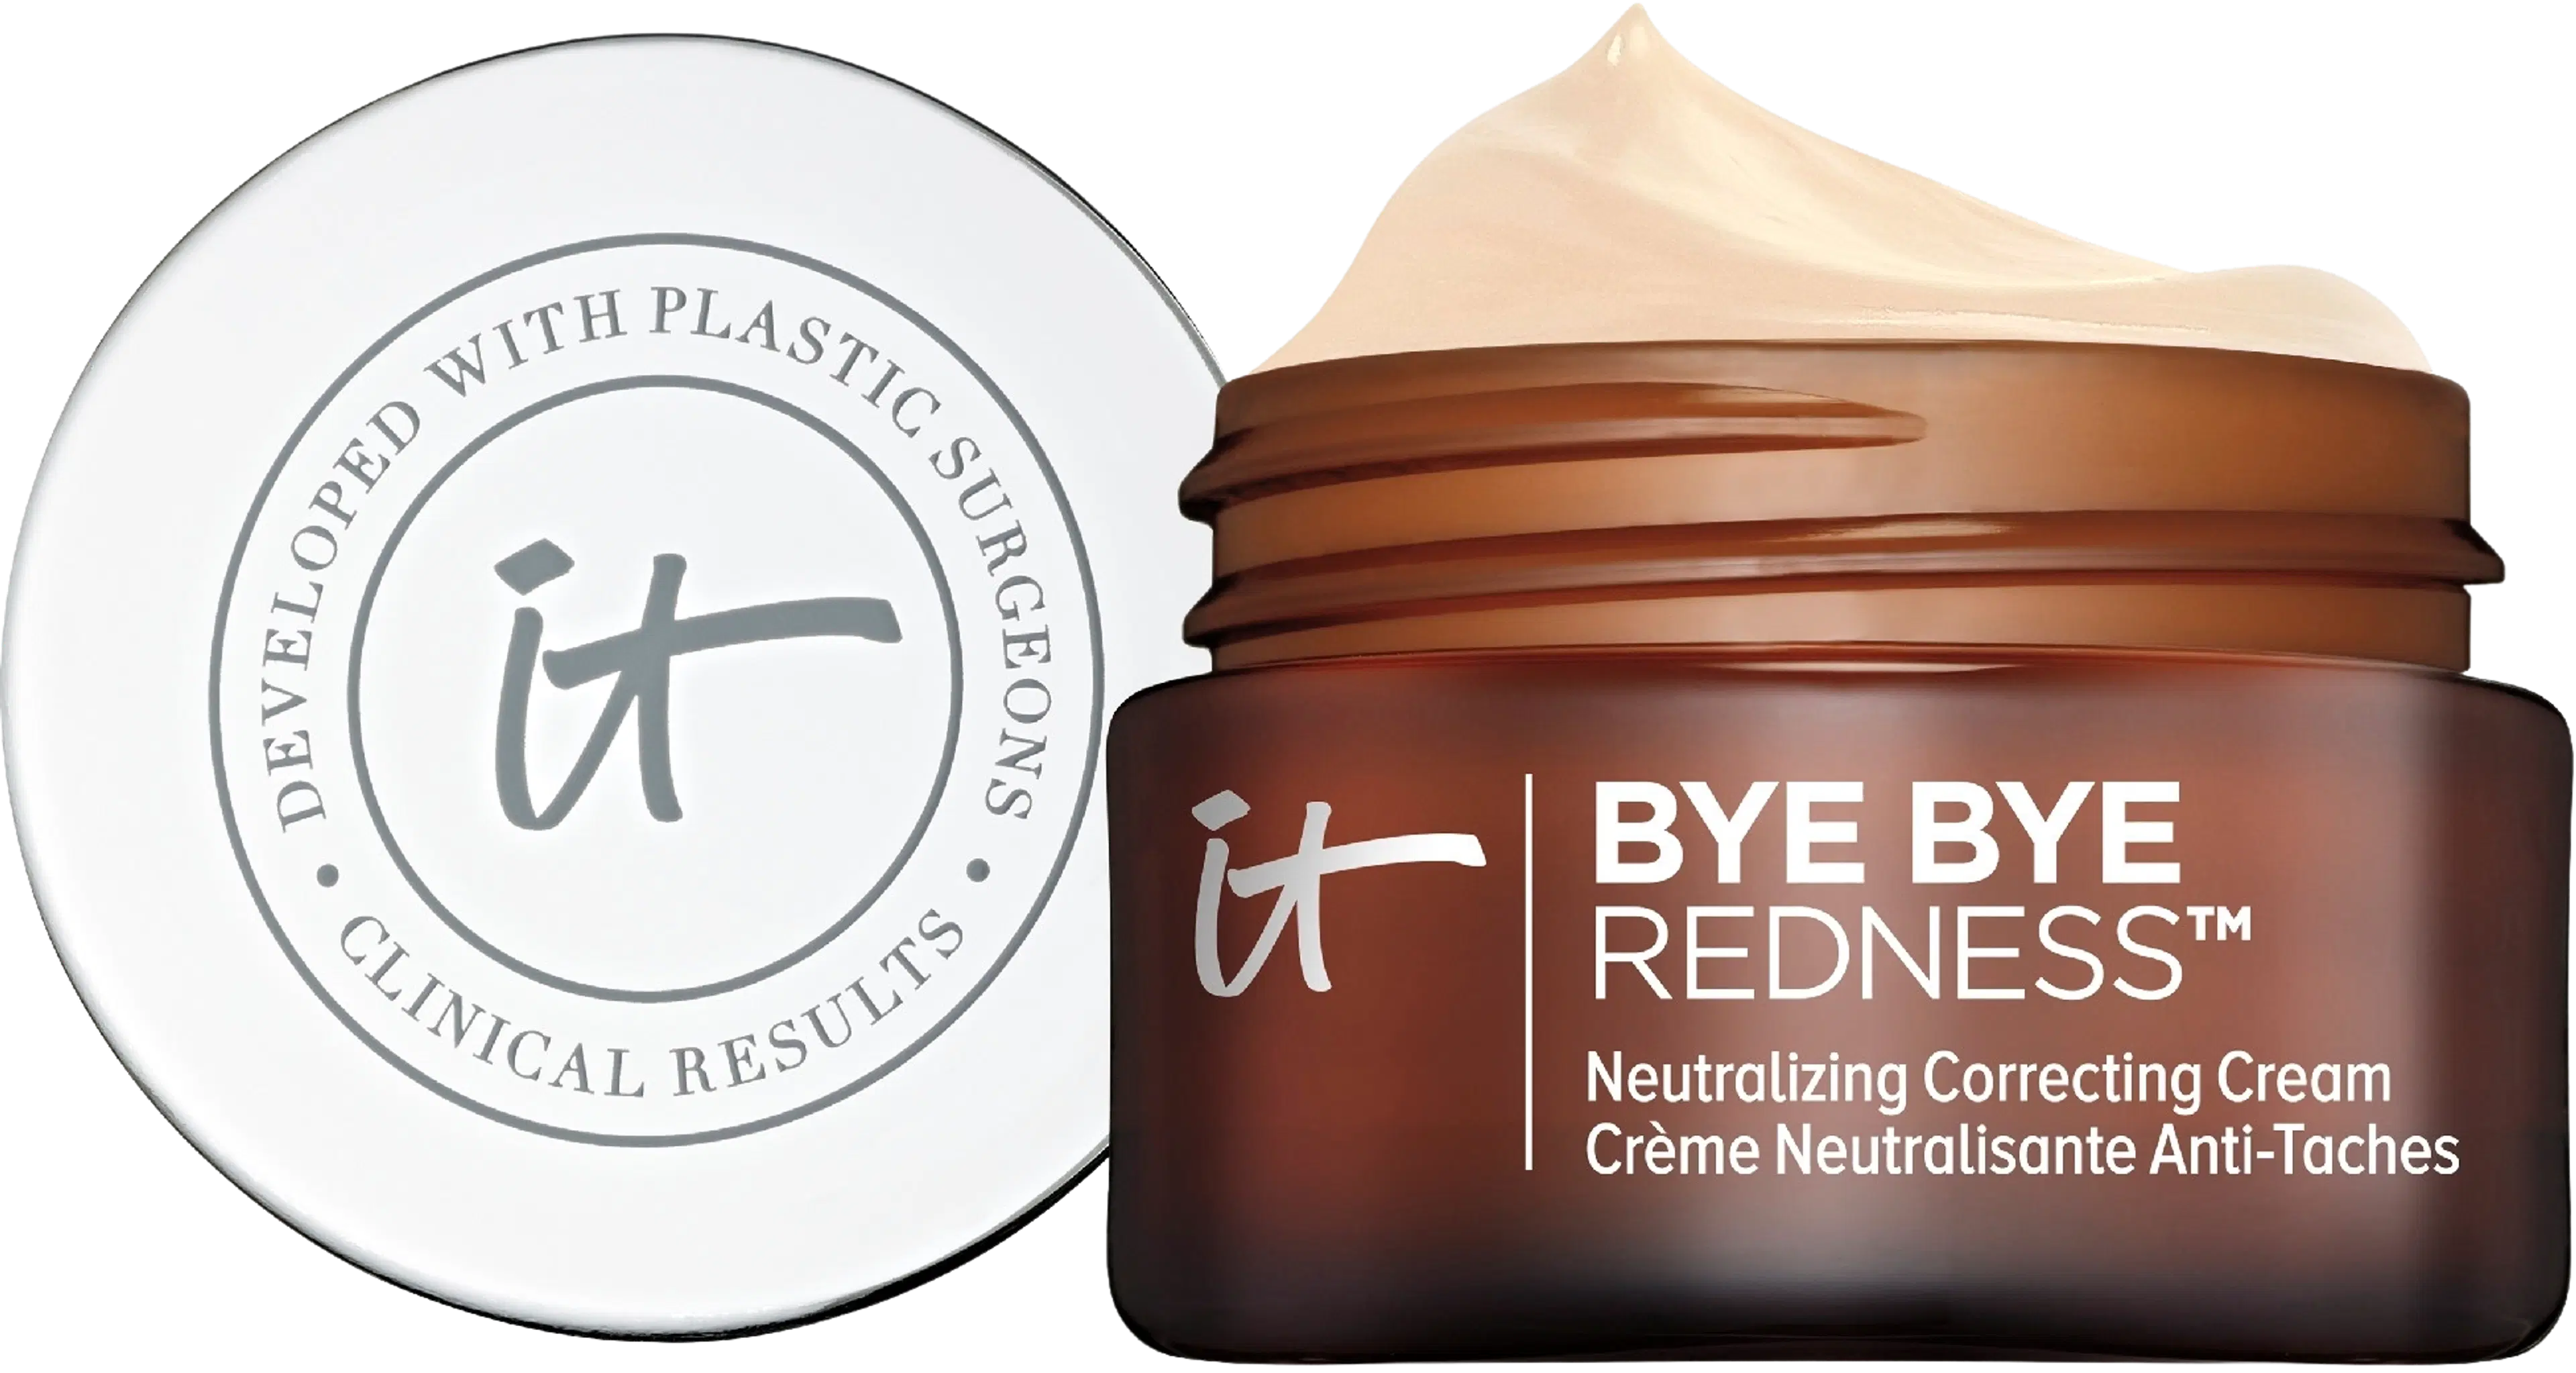 It Cosmetics Bye Bye Redness Correcting Cream värinkorjaaja 11 ml